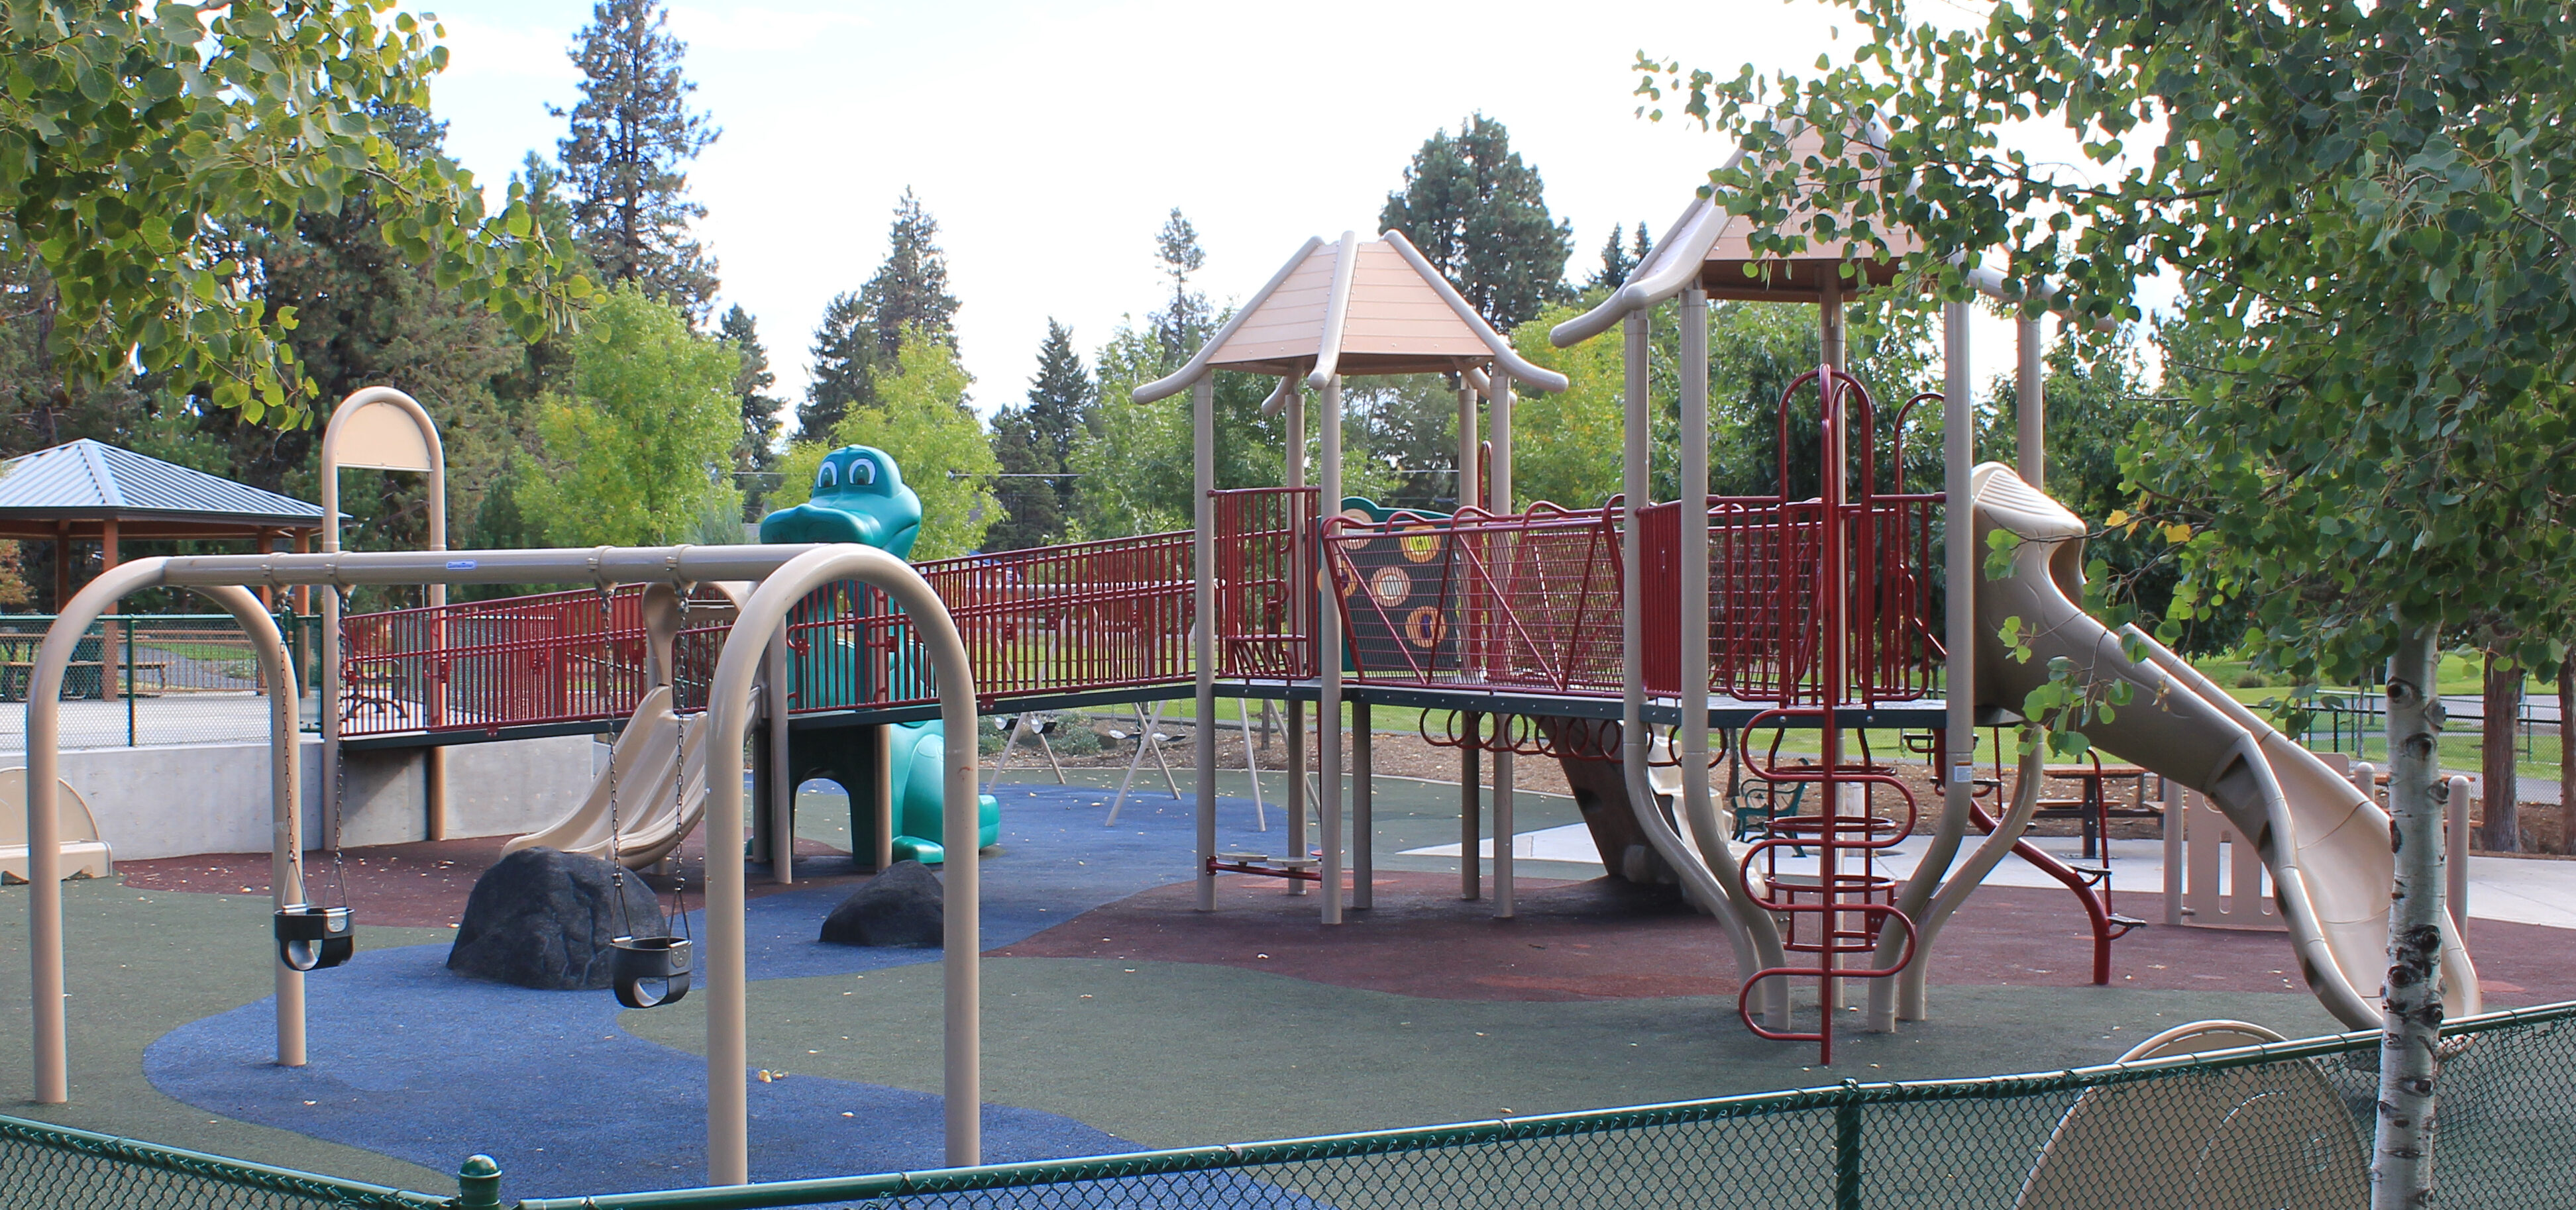 Orchard Park playground